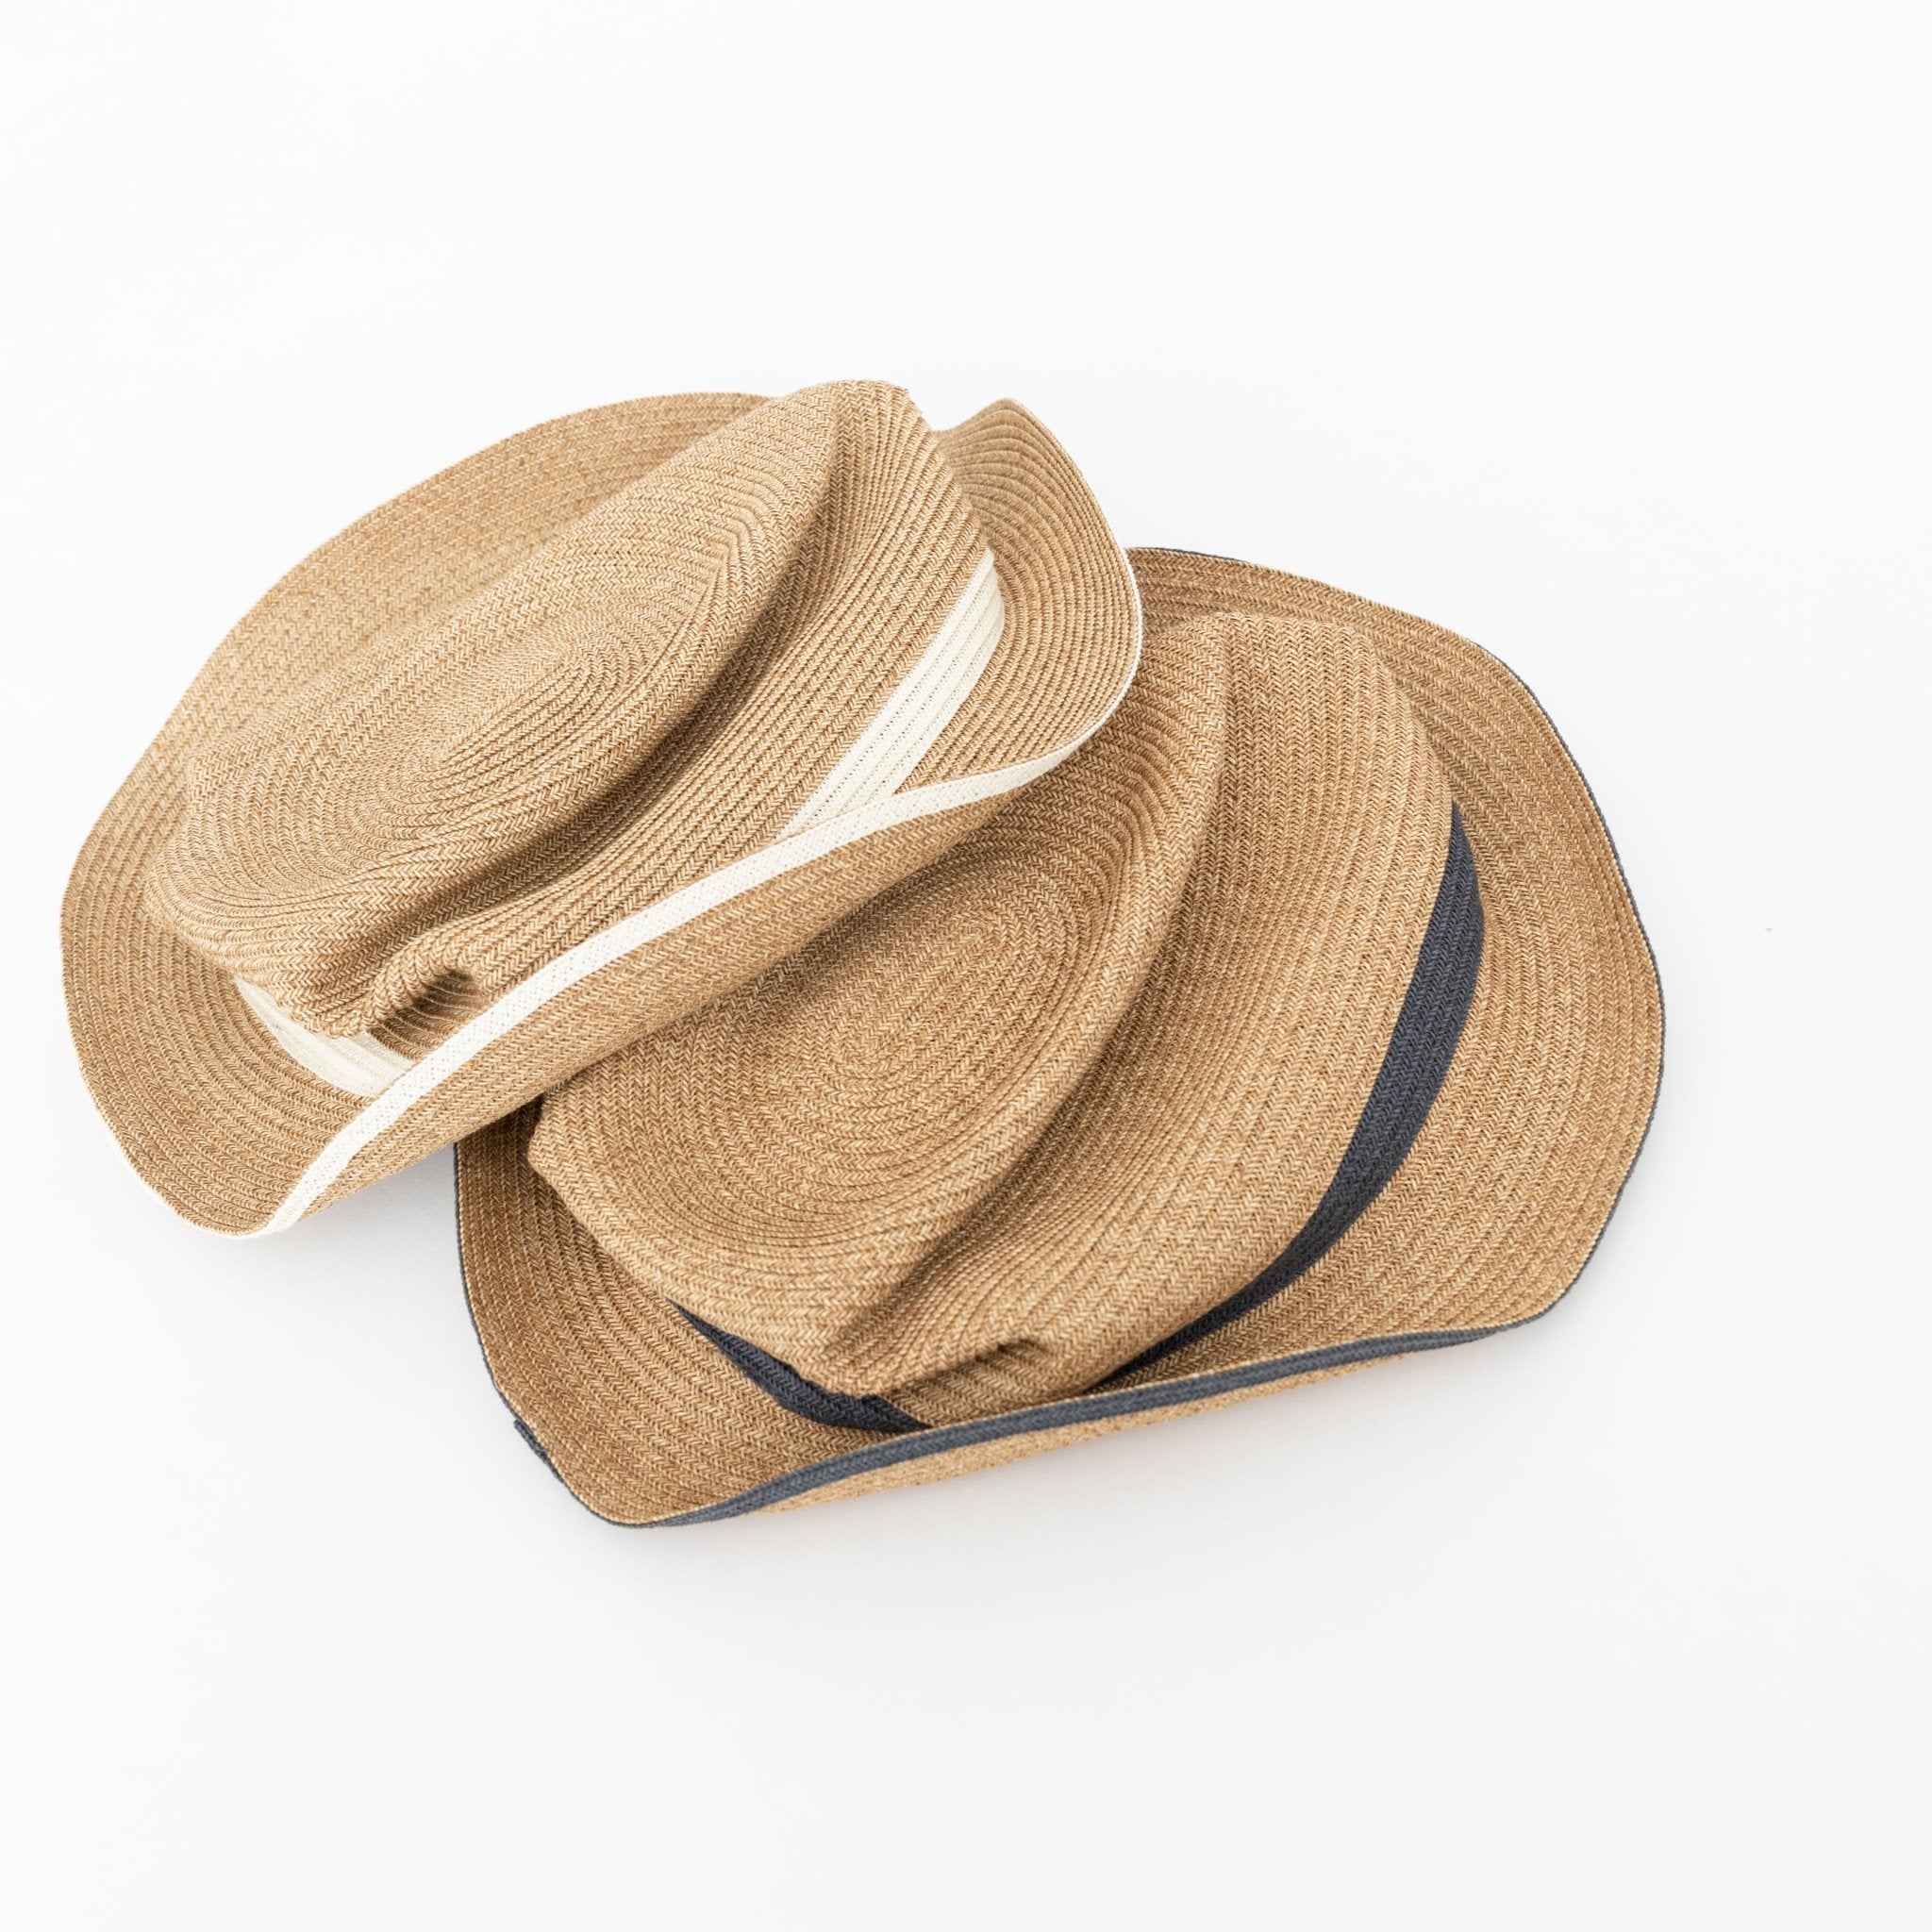 Mature Ha Boxed Hat - 4.5 cm brim – tortoise general store